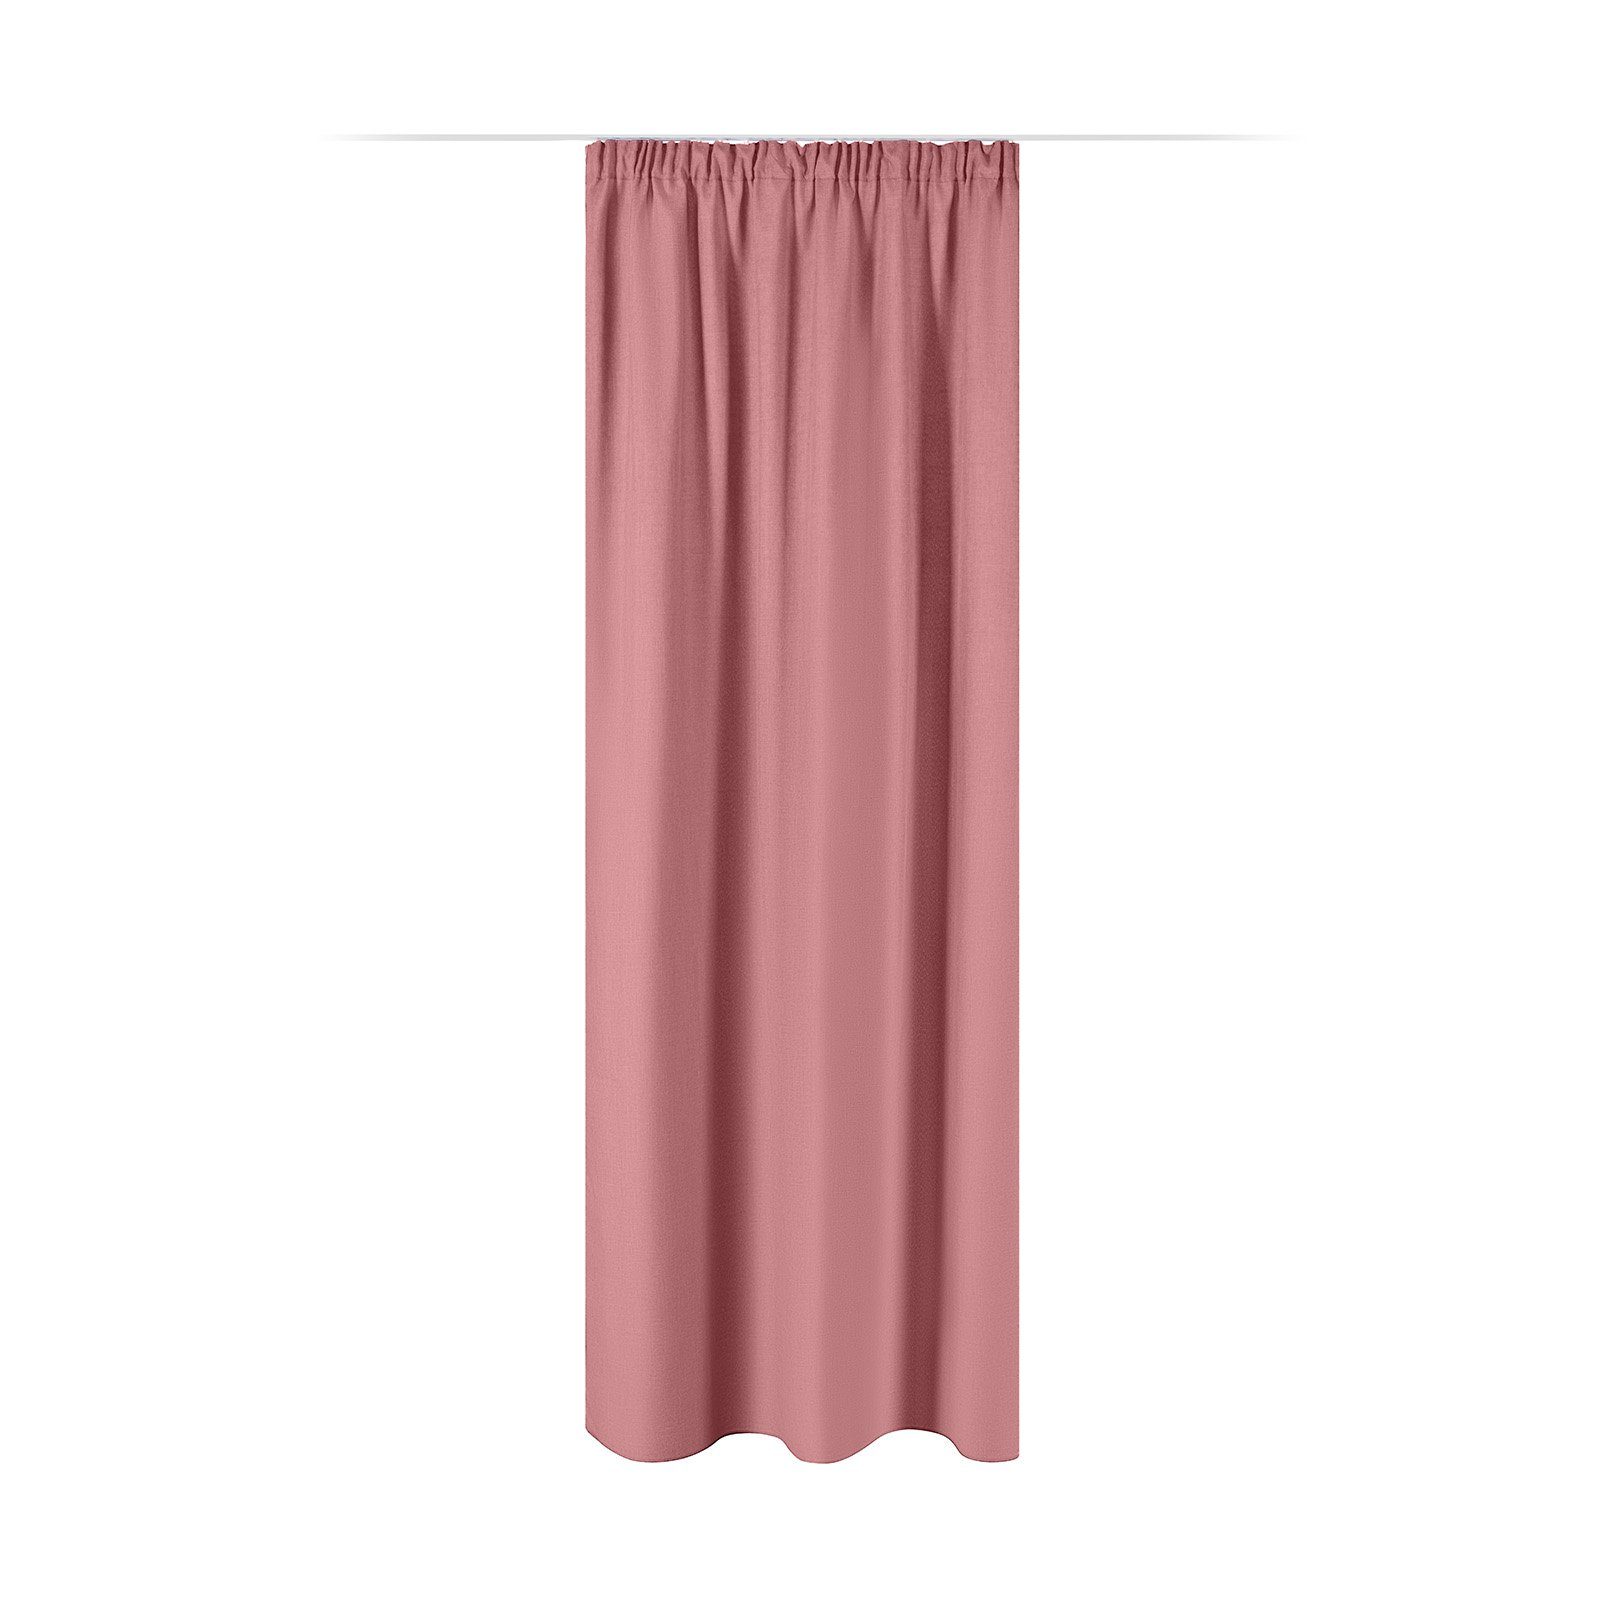 JEMIDI mit Vorhang Altrosa Vorhang Kräuselband, Blickdichter 140x245cm